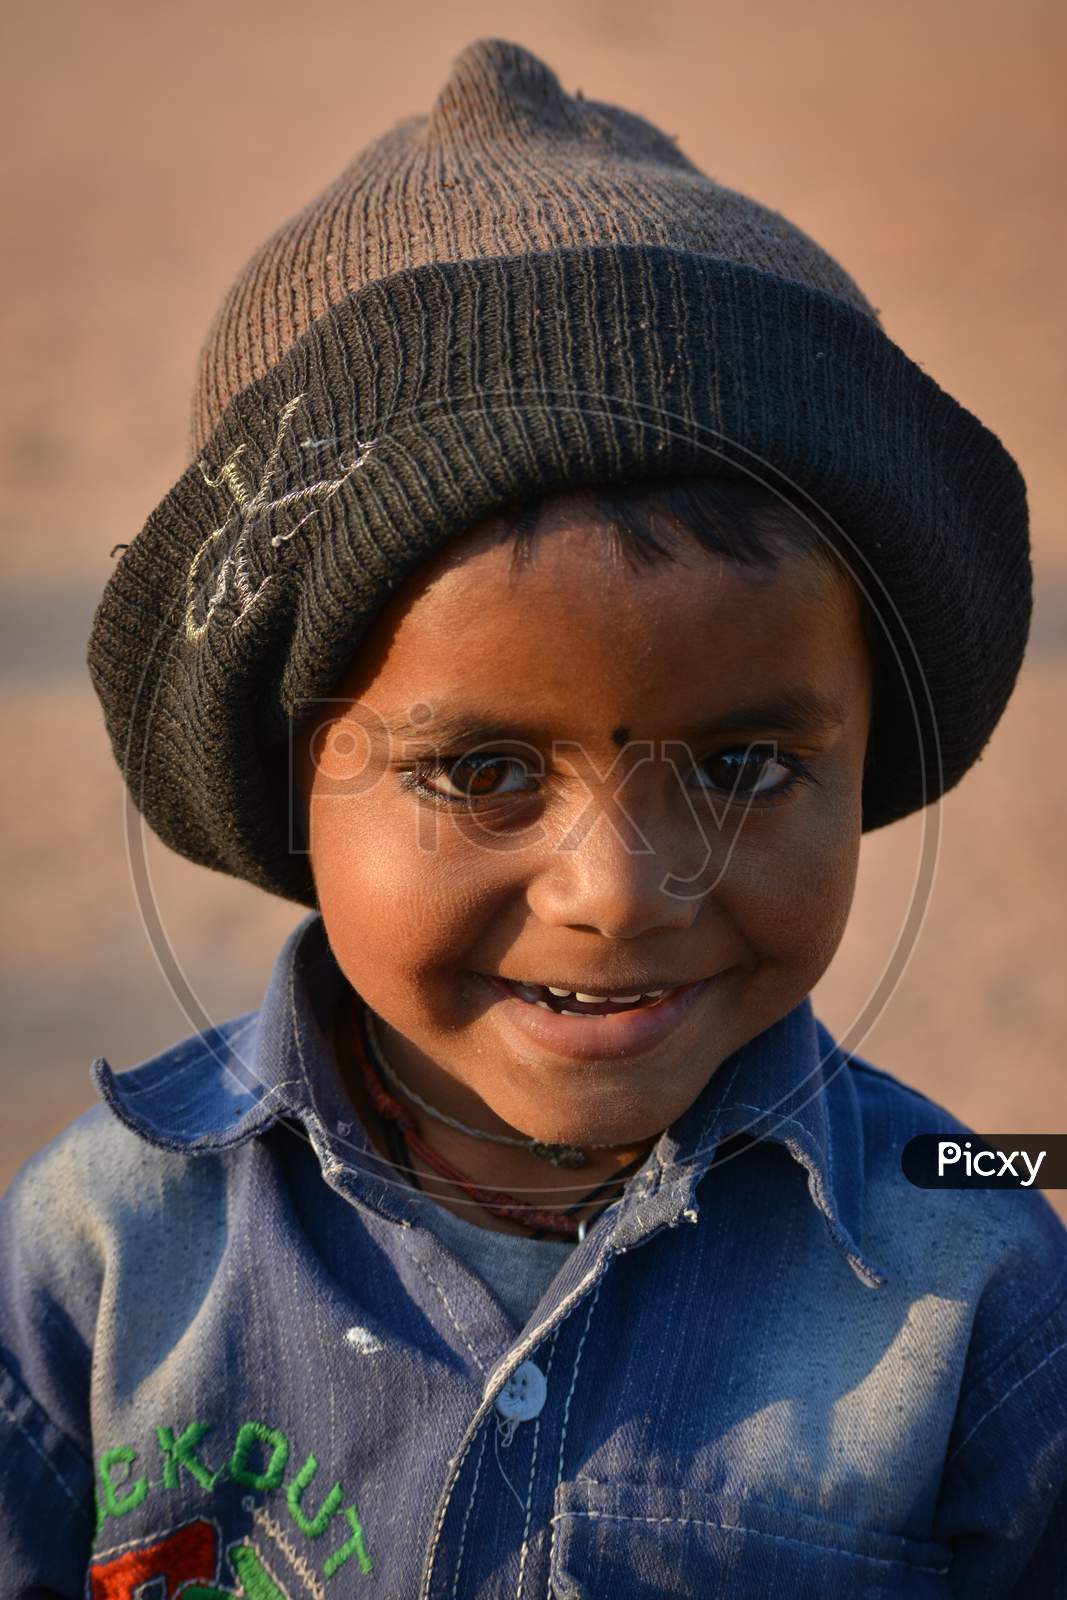 TIKAMGARH, MADHYA PRADESH, INDIA - FEBRUARY 11, 2020: Little kid smiling at the camera.